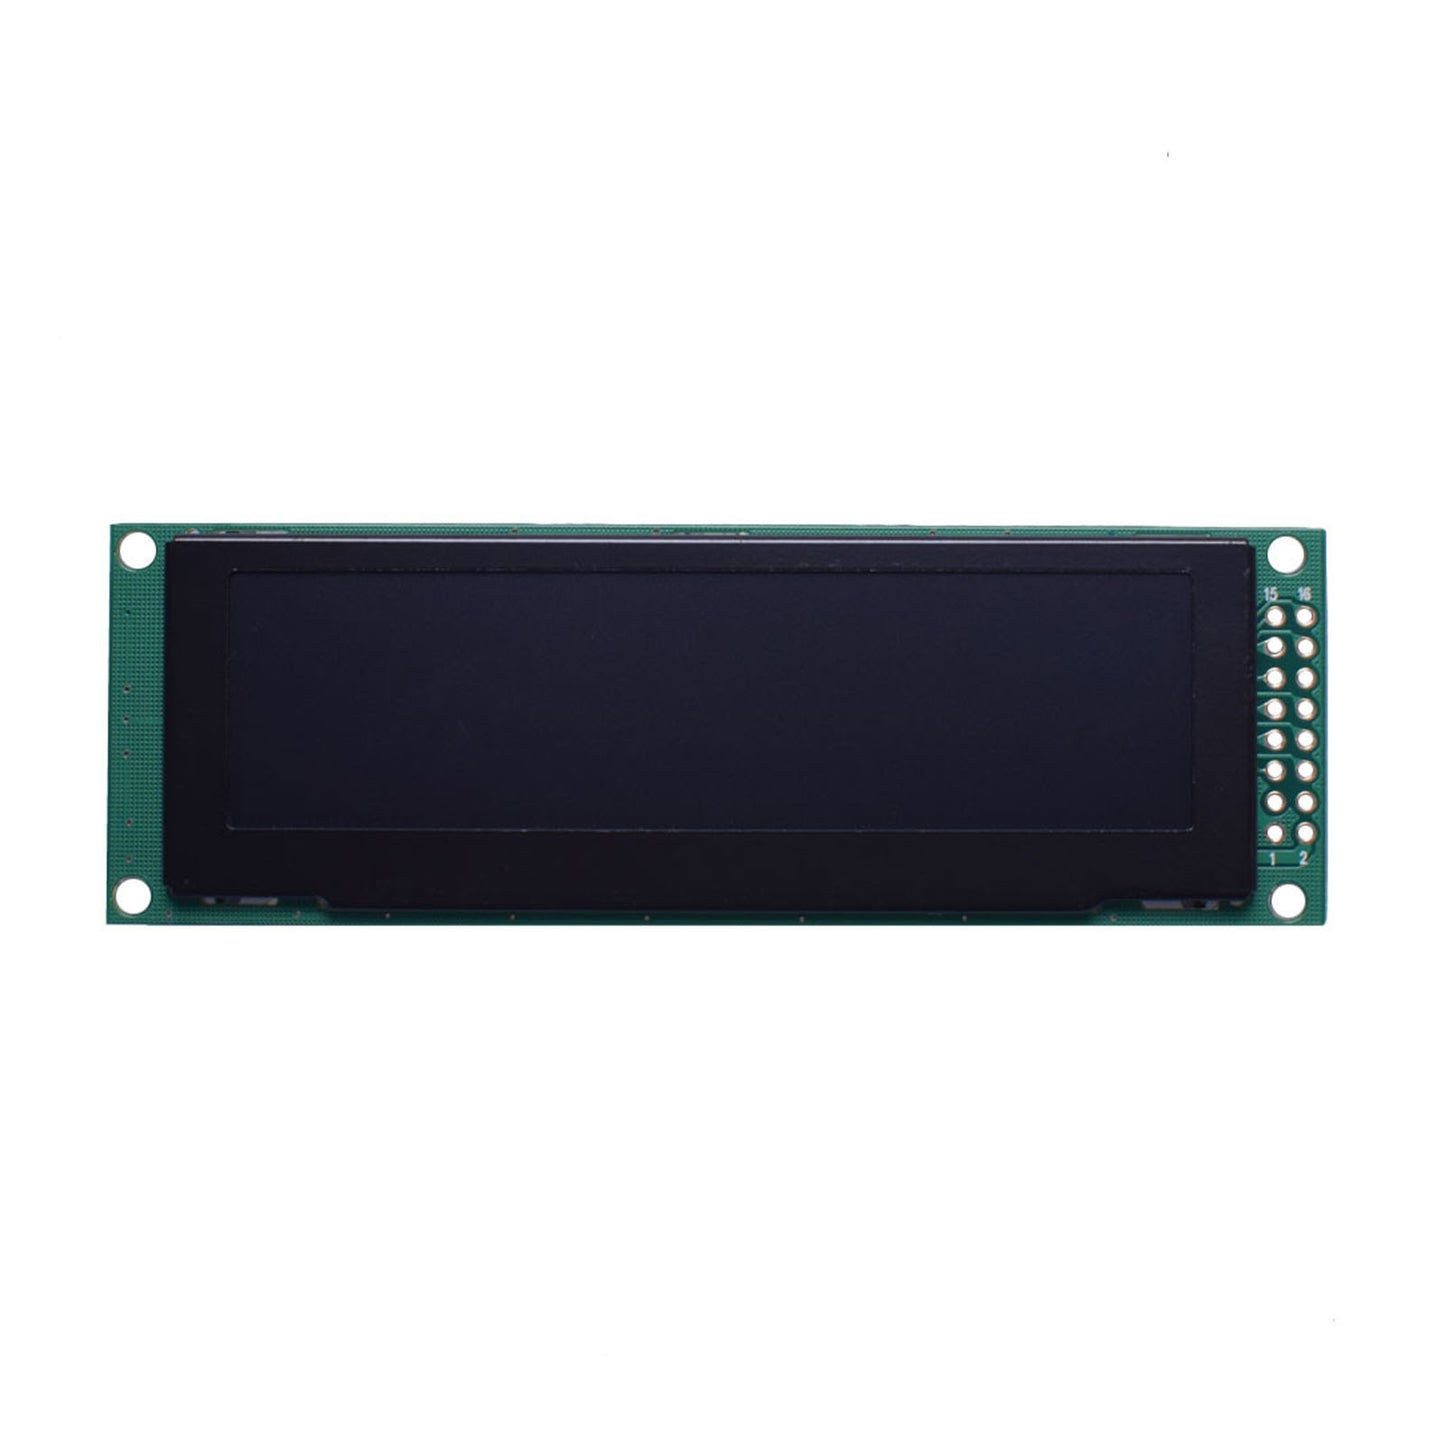 DisplayModule 3.2" 256x64 Monochrome Graphic OLED Display Module - MCU, SPI